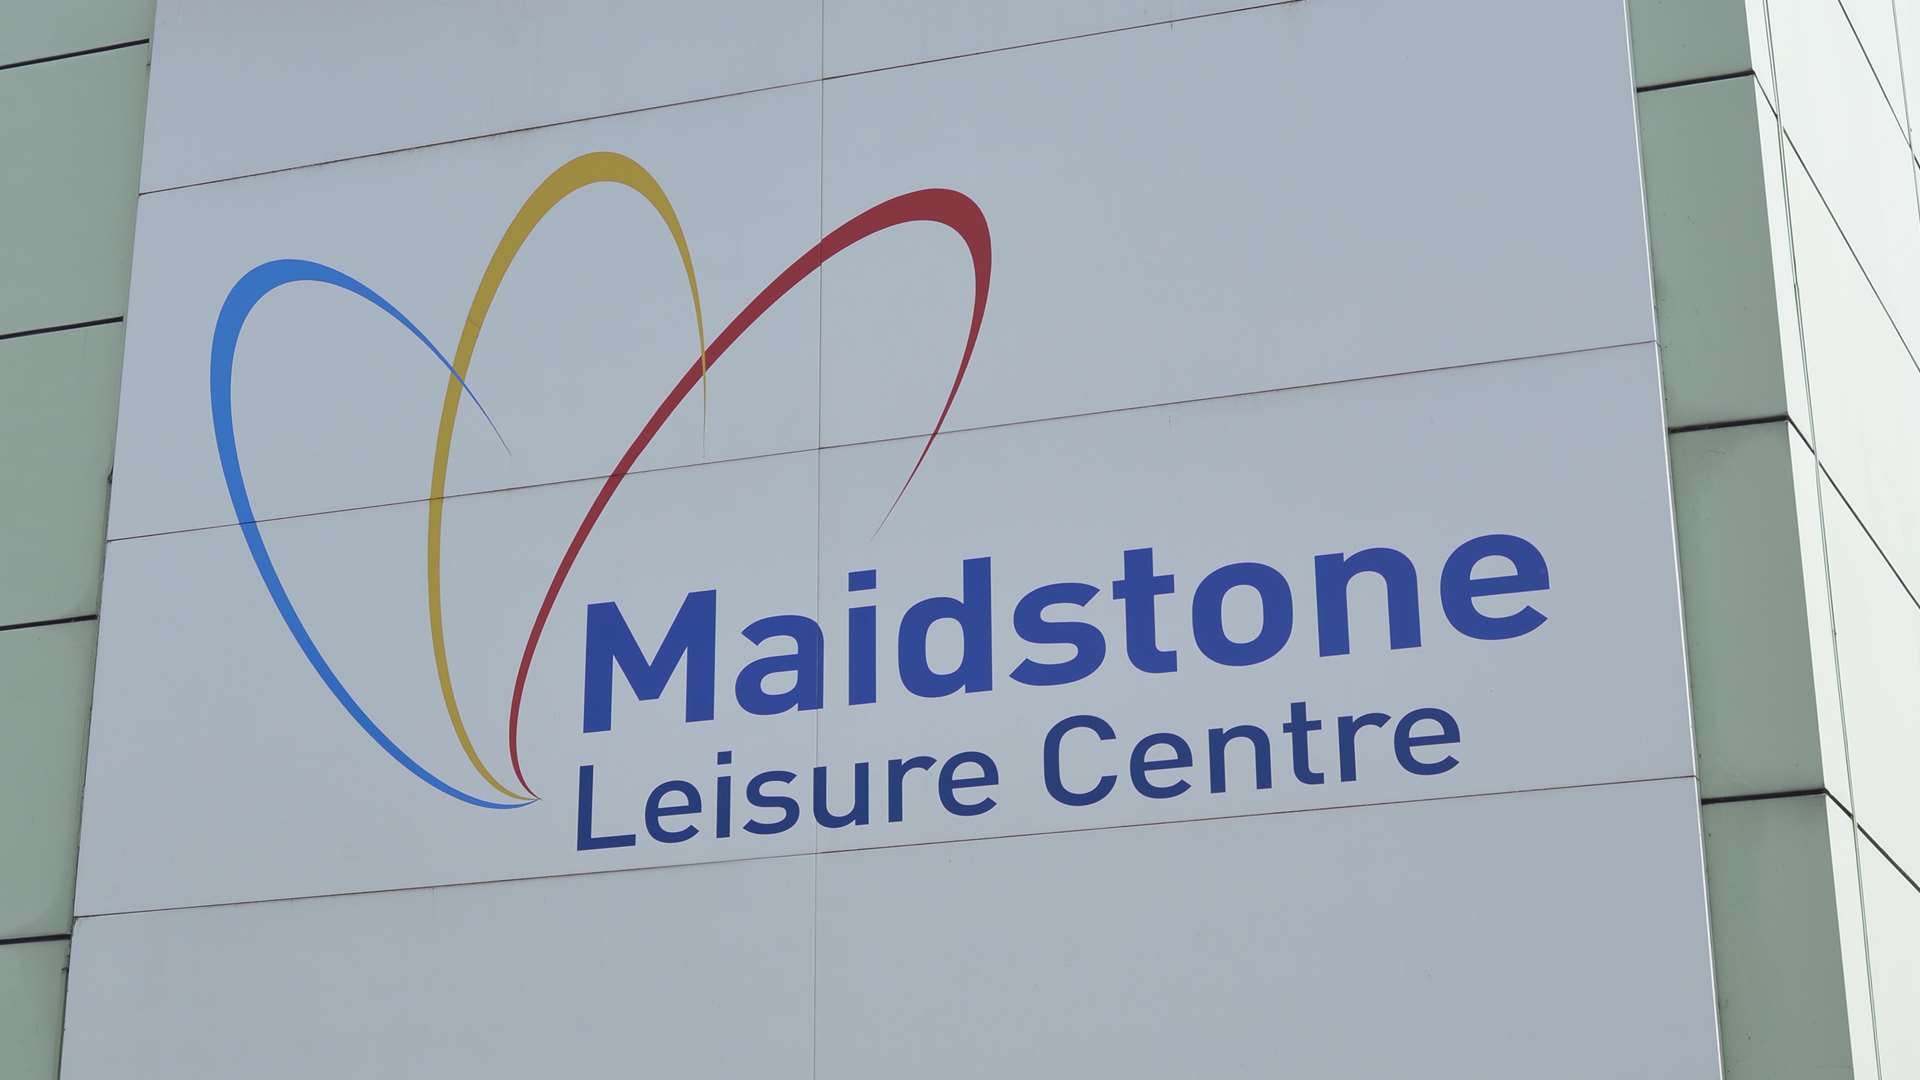 Maidstone Leisure Centre